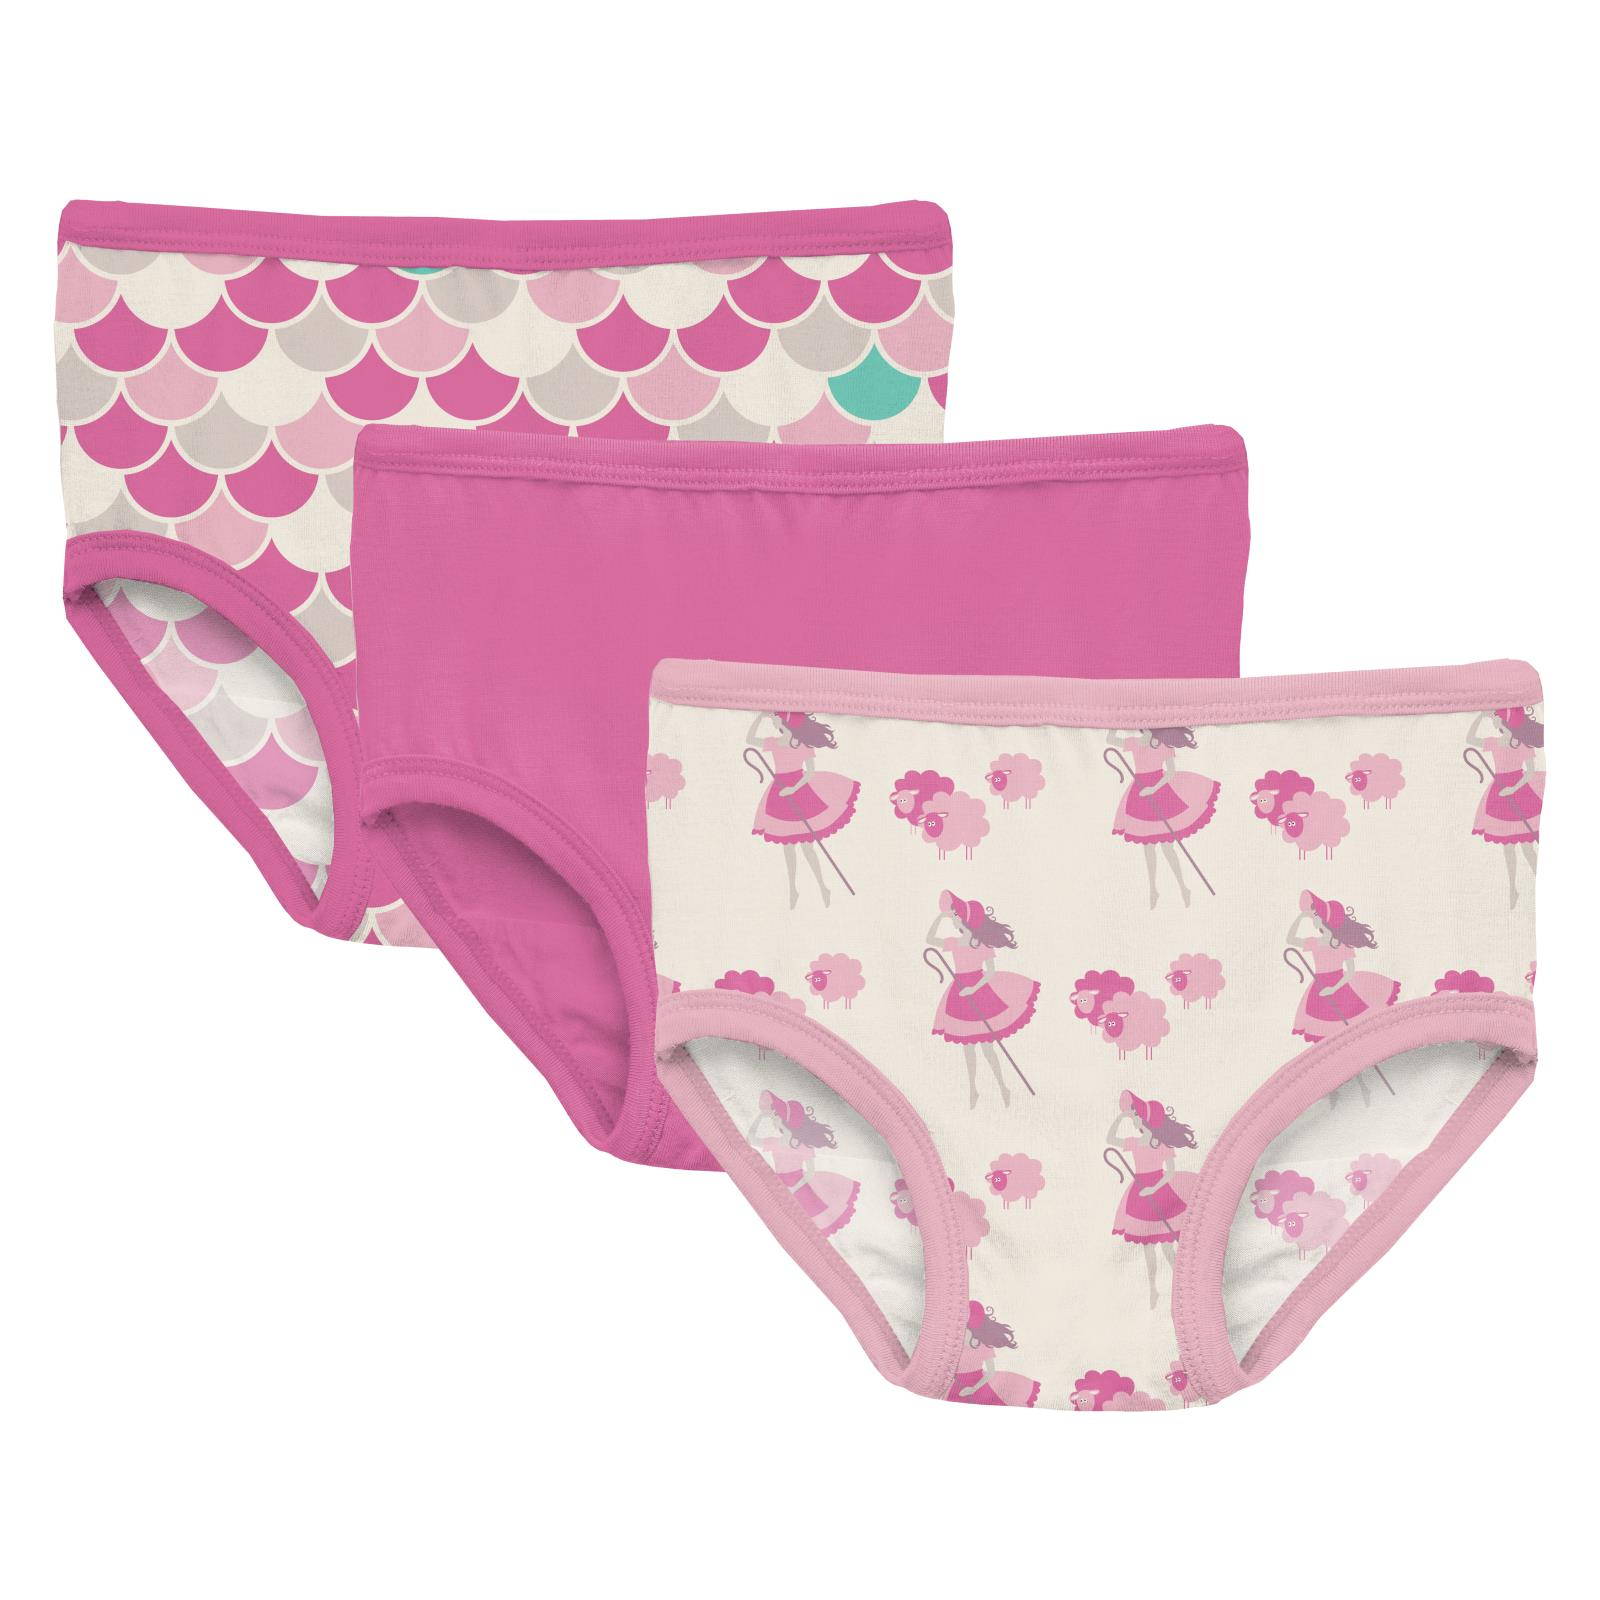 Print Girl's Underwear Set of 3 (Tulip Scales/Tulip/Little Bo Peep)